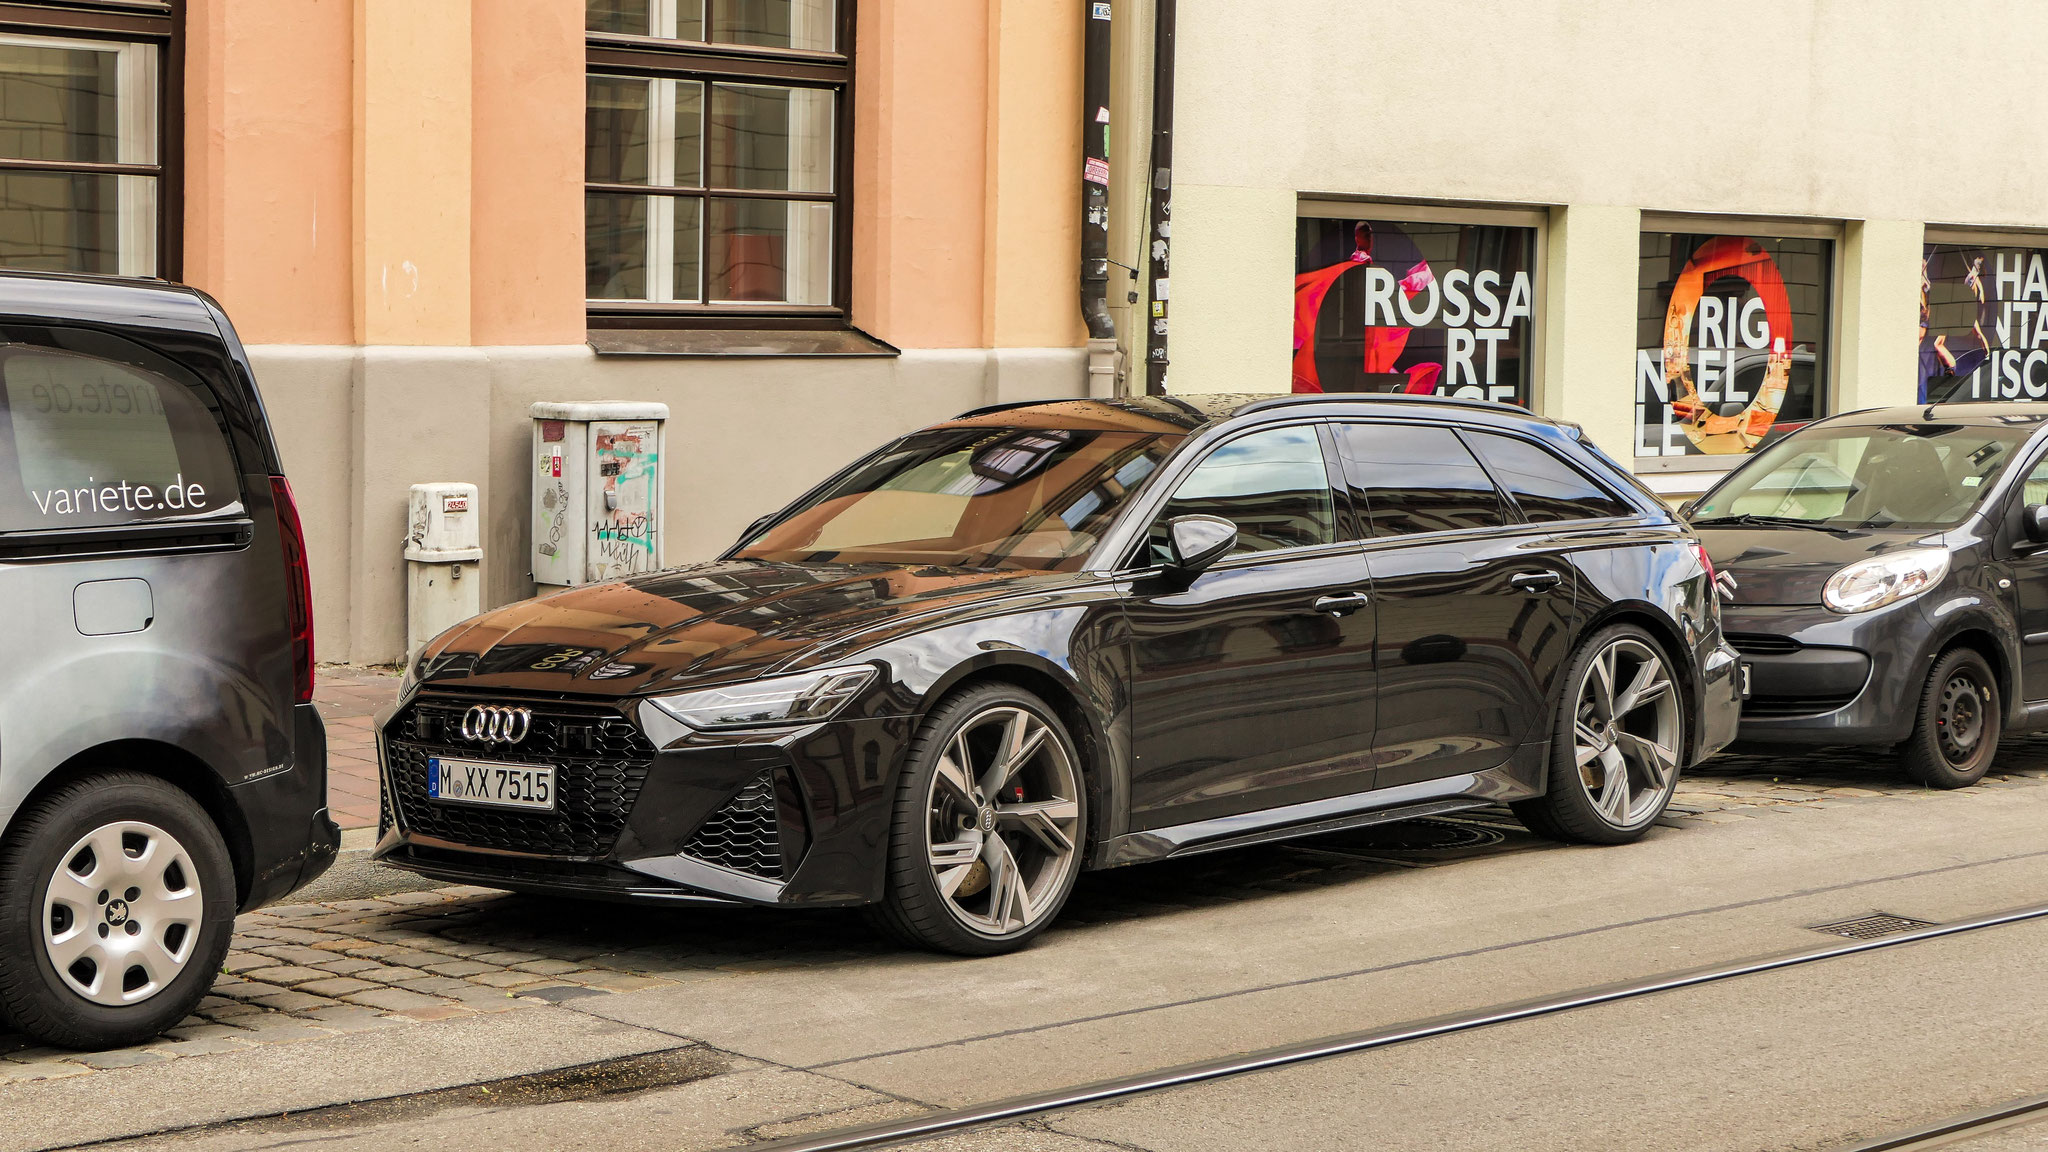 Audi RS6 - M-XX-7515